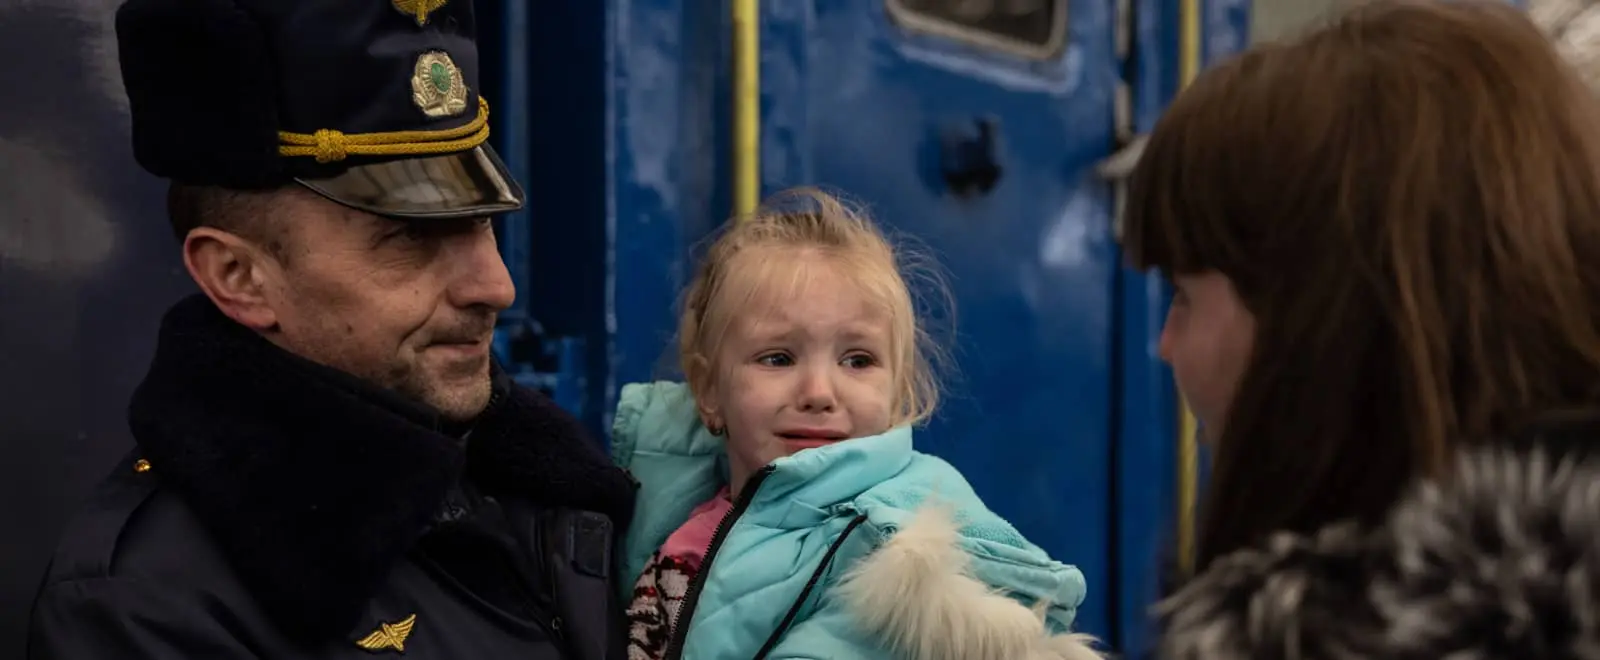 People from Odessa fleeing Ukraine via Lviv train station